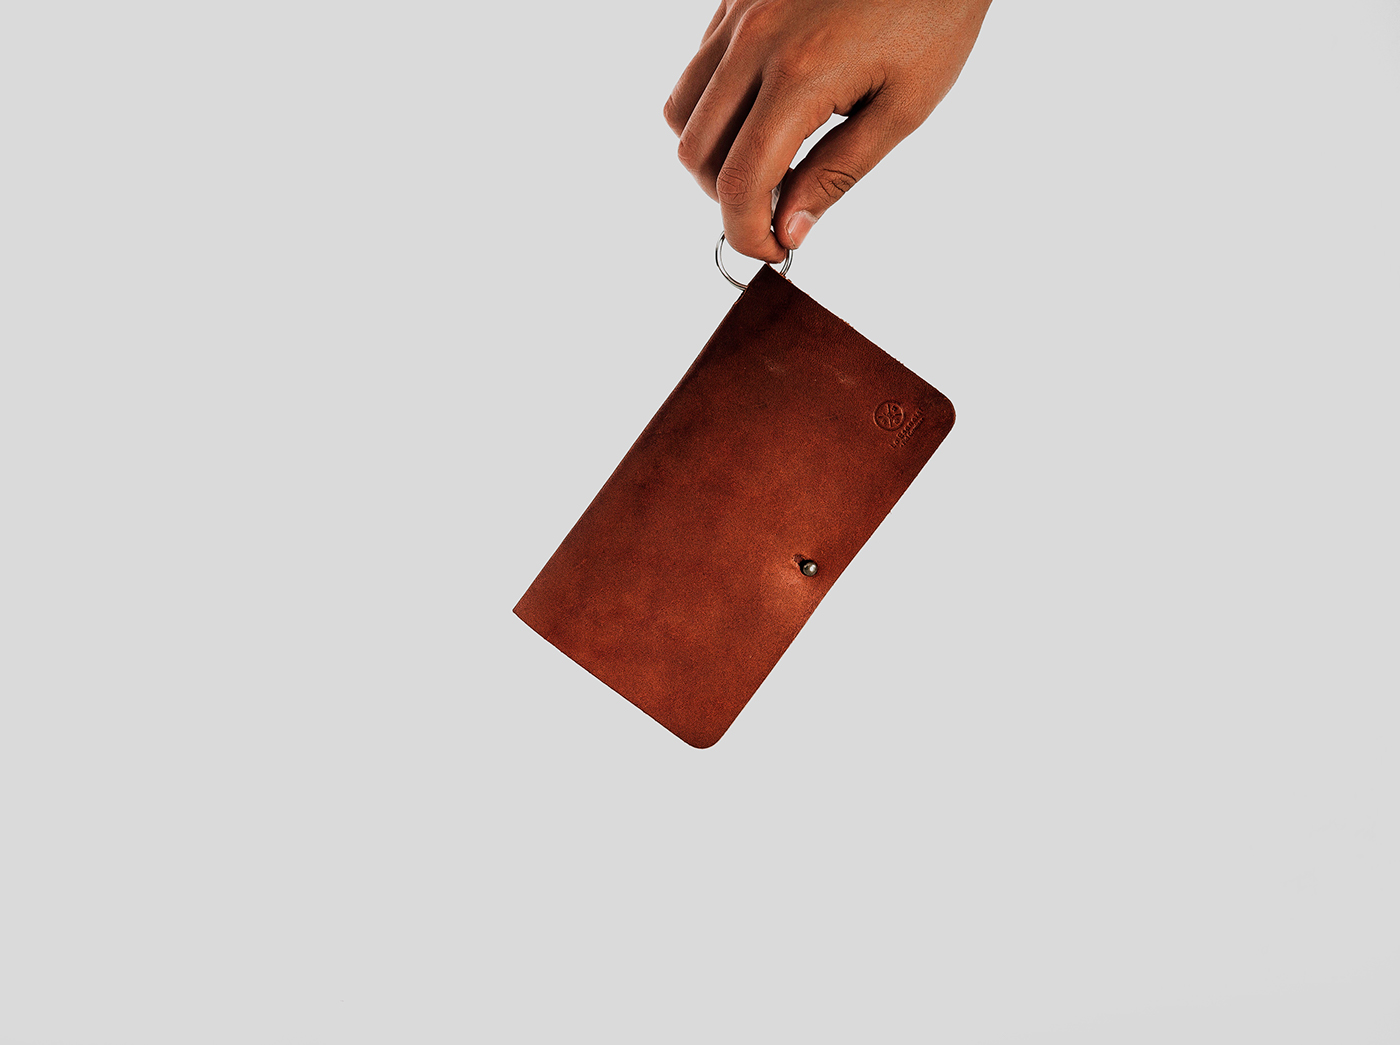 leather product walet iPad details mexico Guadalajara pencil interact